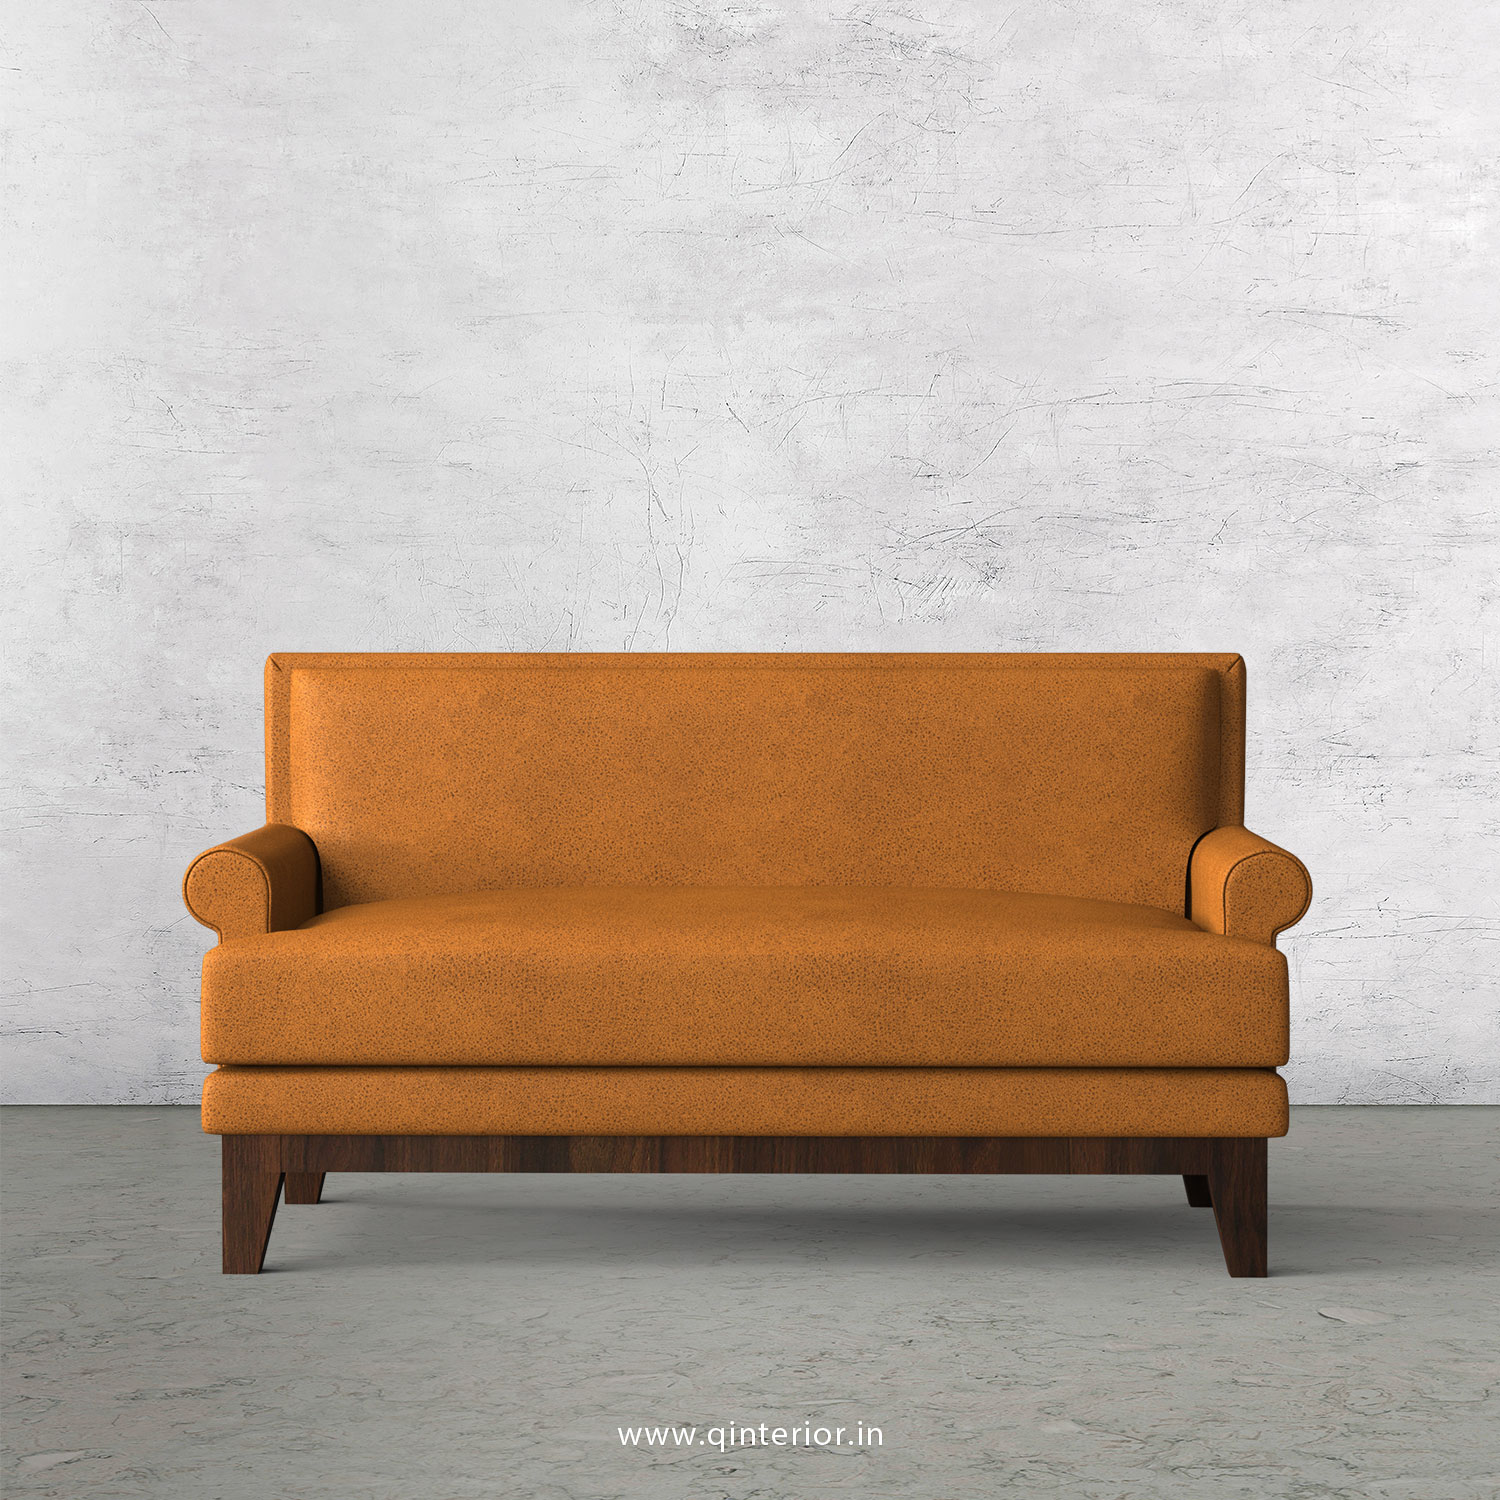 Aviana 2 Seater Sofa in Fab Leather Fabric - SFA001 FL14